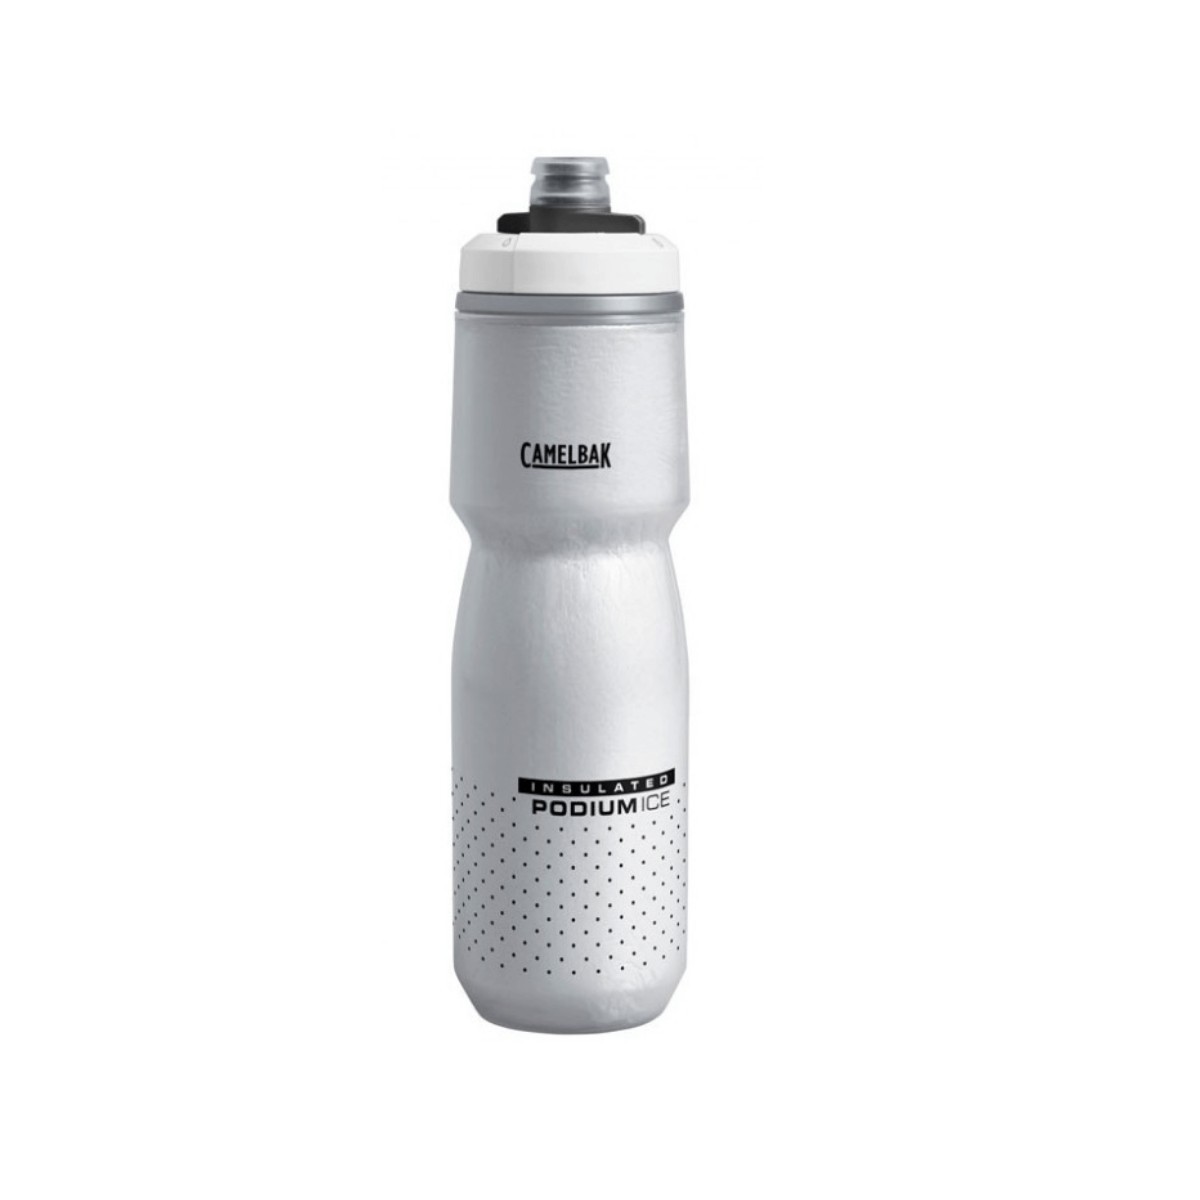 Camelbak Podium Ice 2019 White 0.6L Bottle